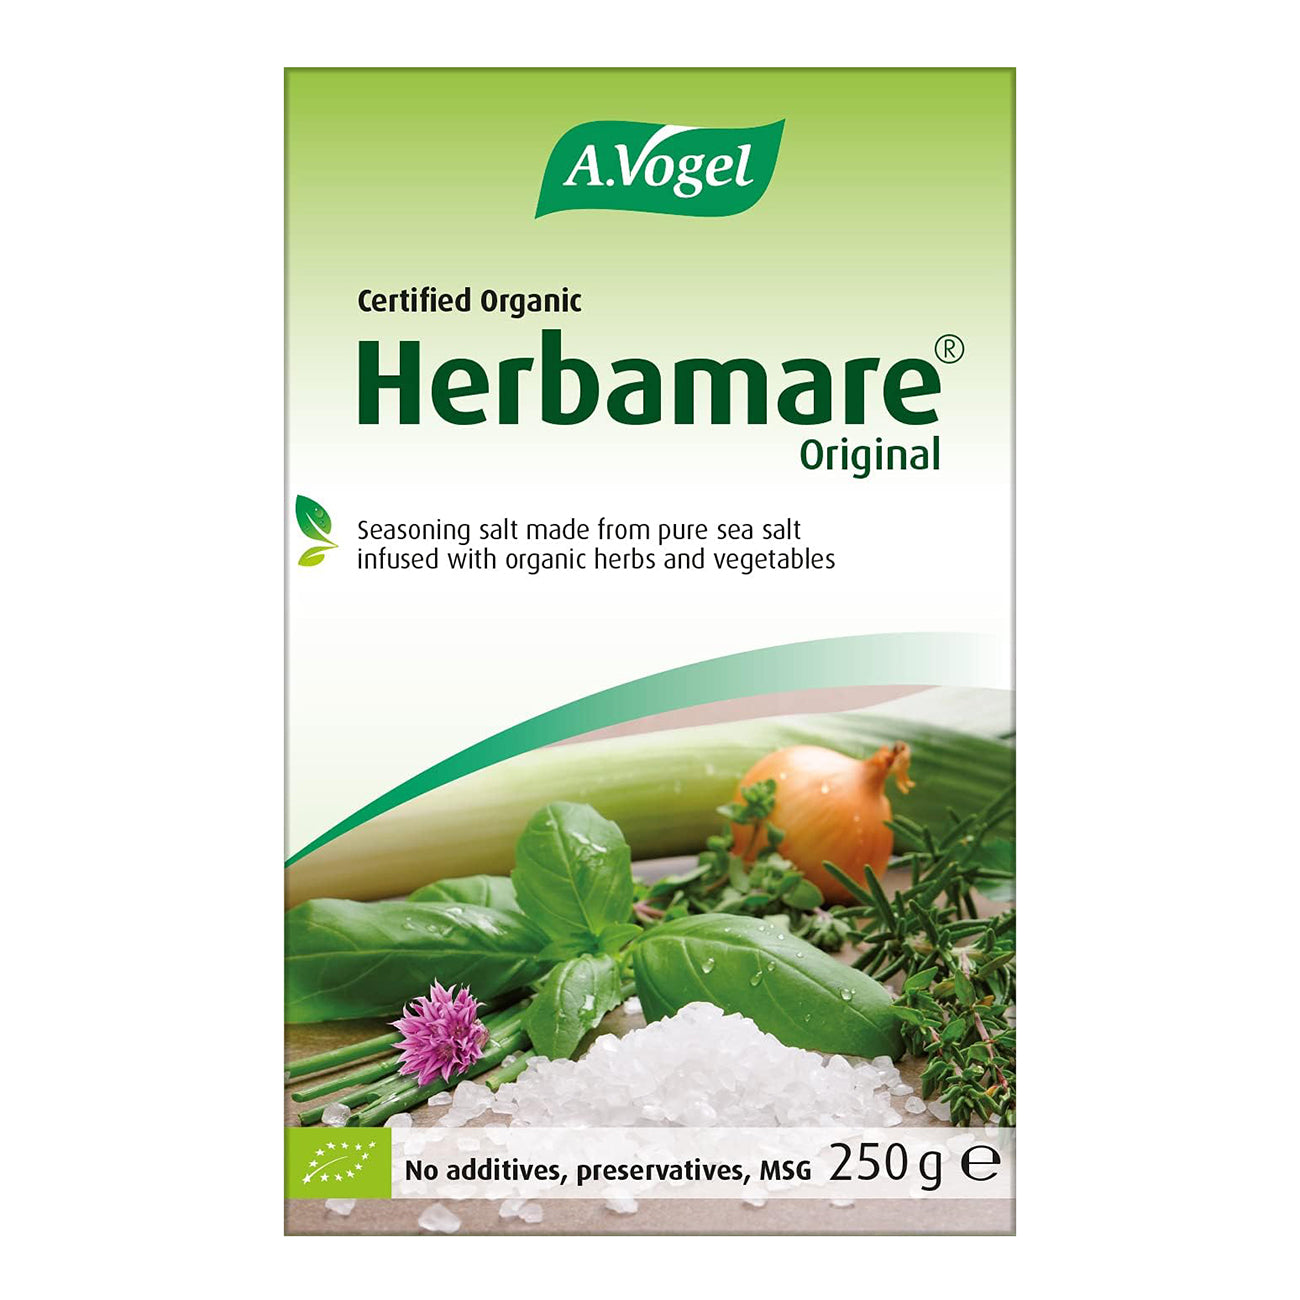 Organic Herbamare Salt Original 250g